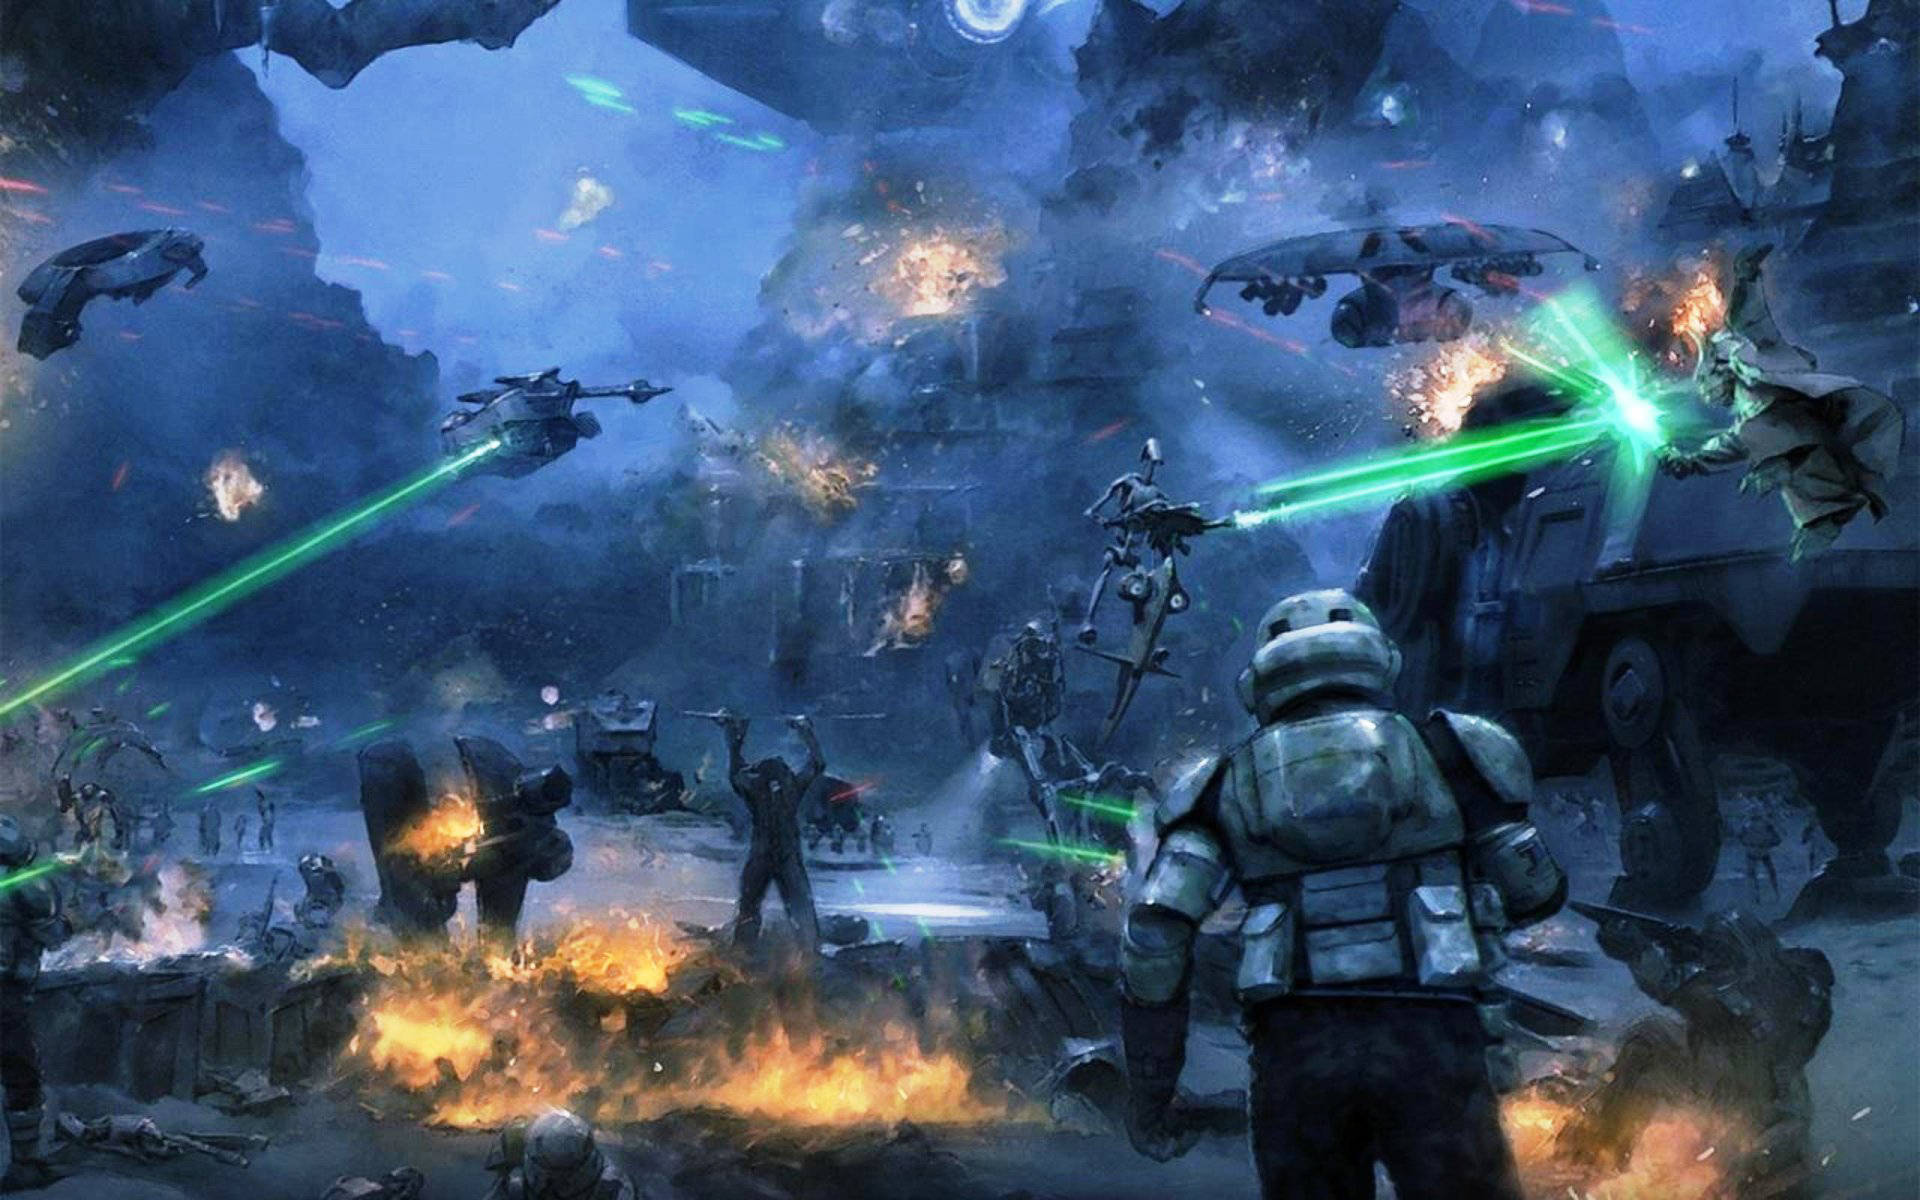 Chaotic Star Wars Battle Landscape Wallpaper